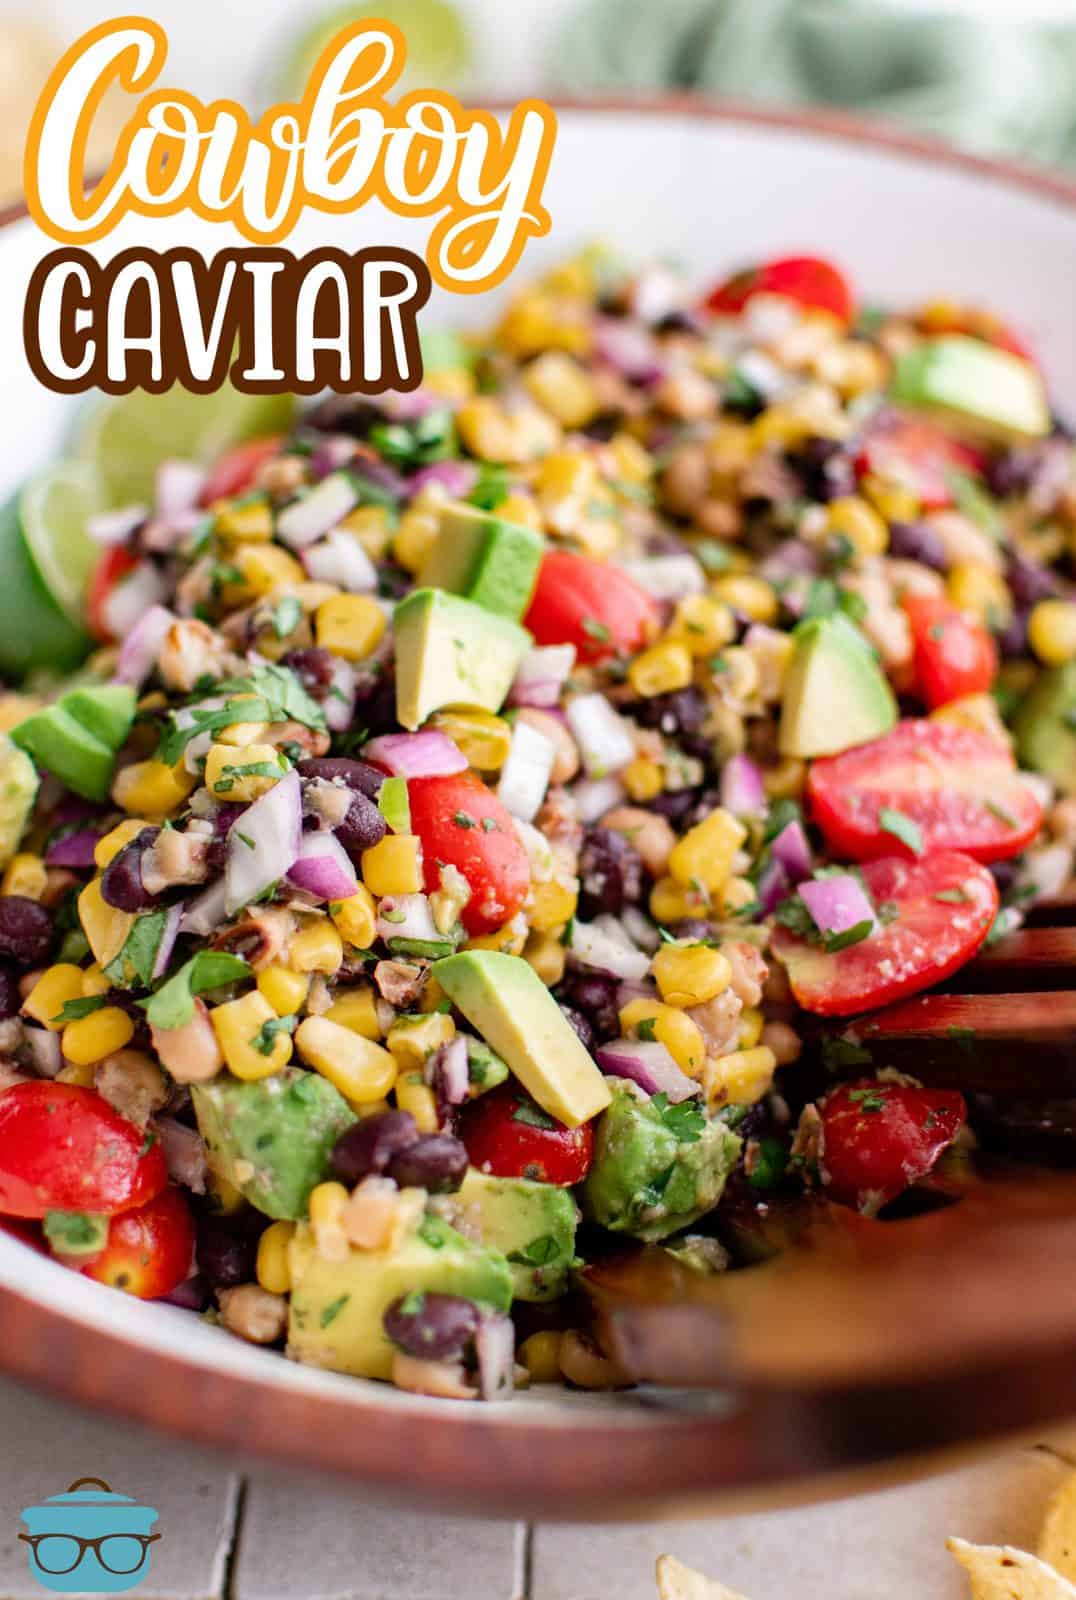 Pinterest image of Cowboy Caviar on wooden plate Pinterest image.